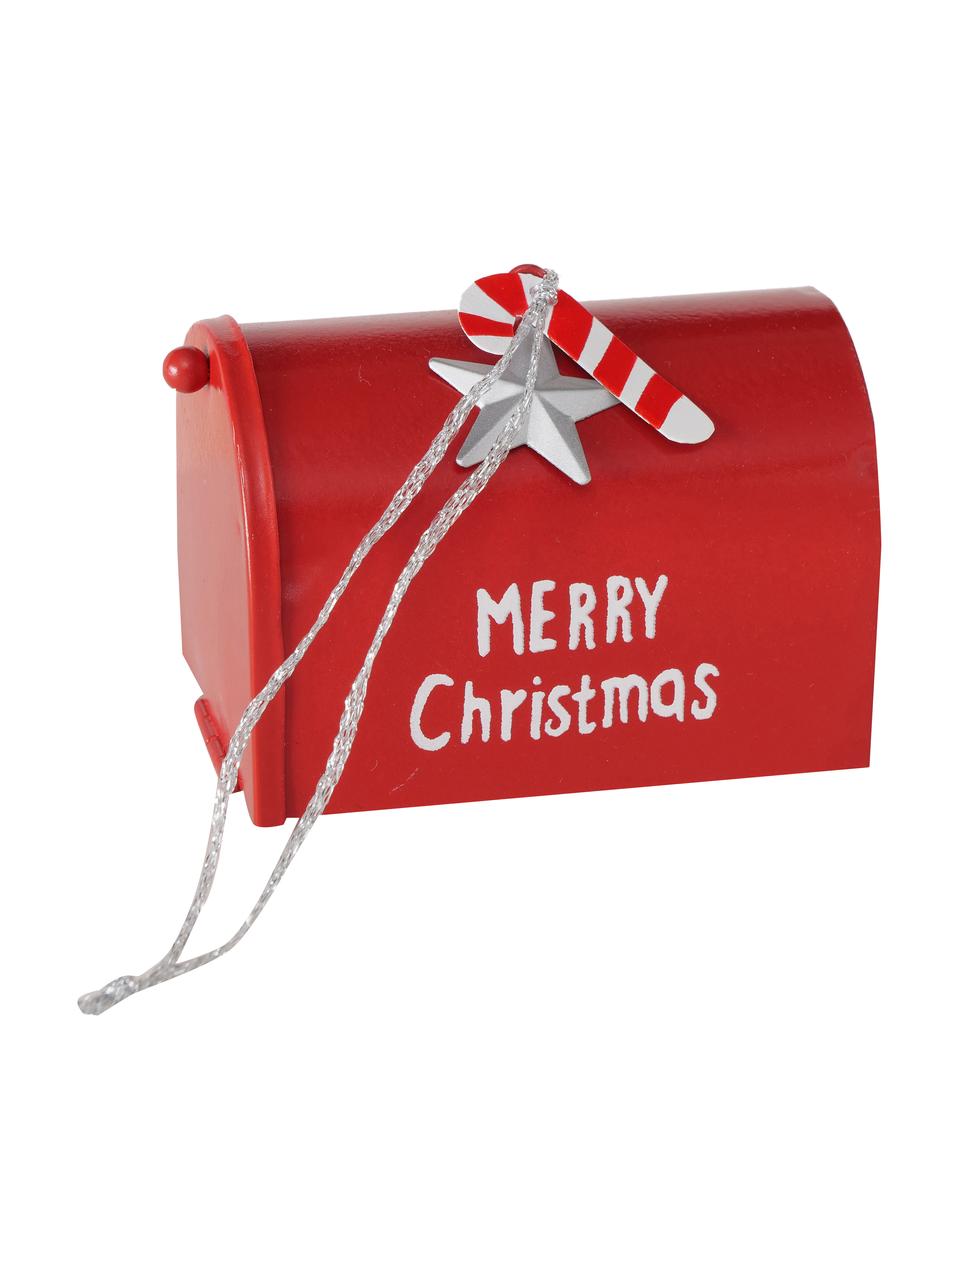 Adornos navideños Santa's Mailbox, 4 uds., Metal, pintado, poliéster, Rojo, blanco, plateado, An 9 x Al 7 cm